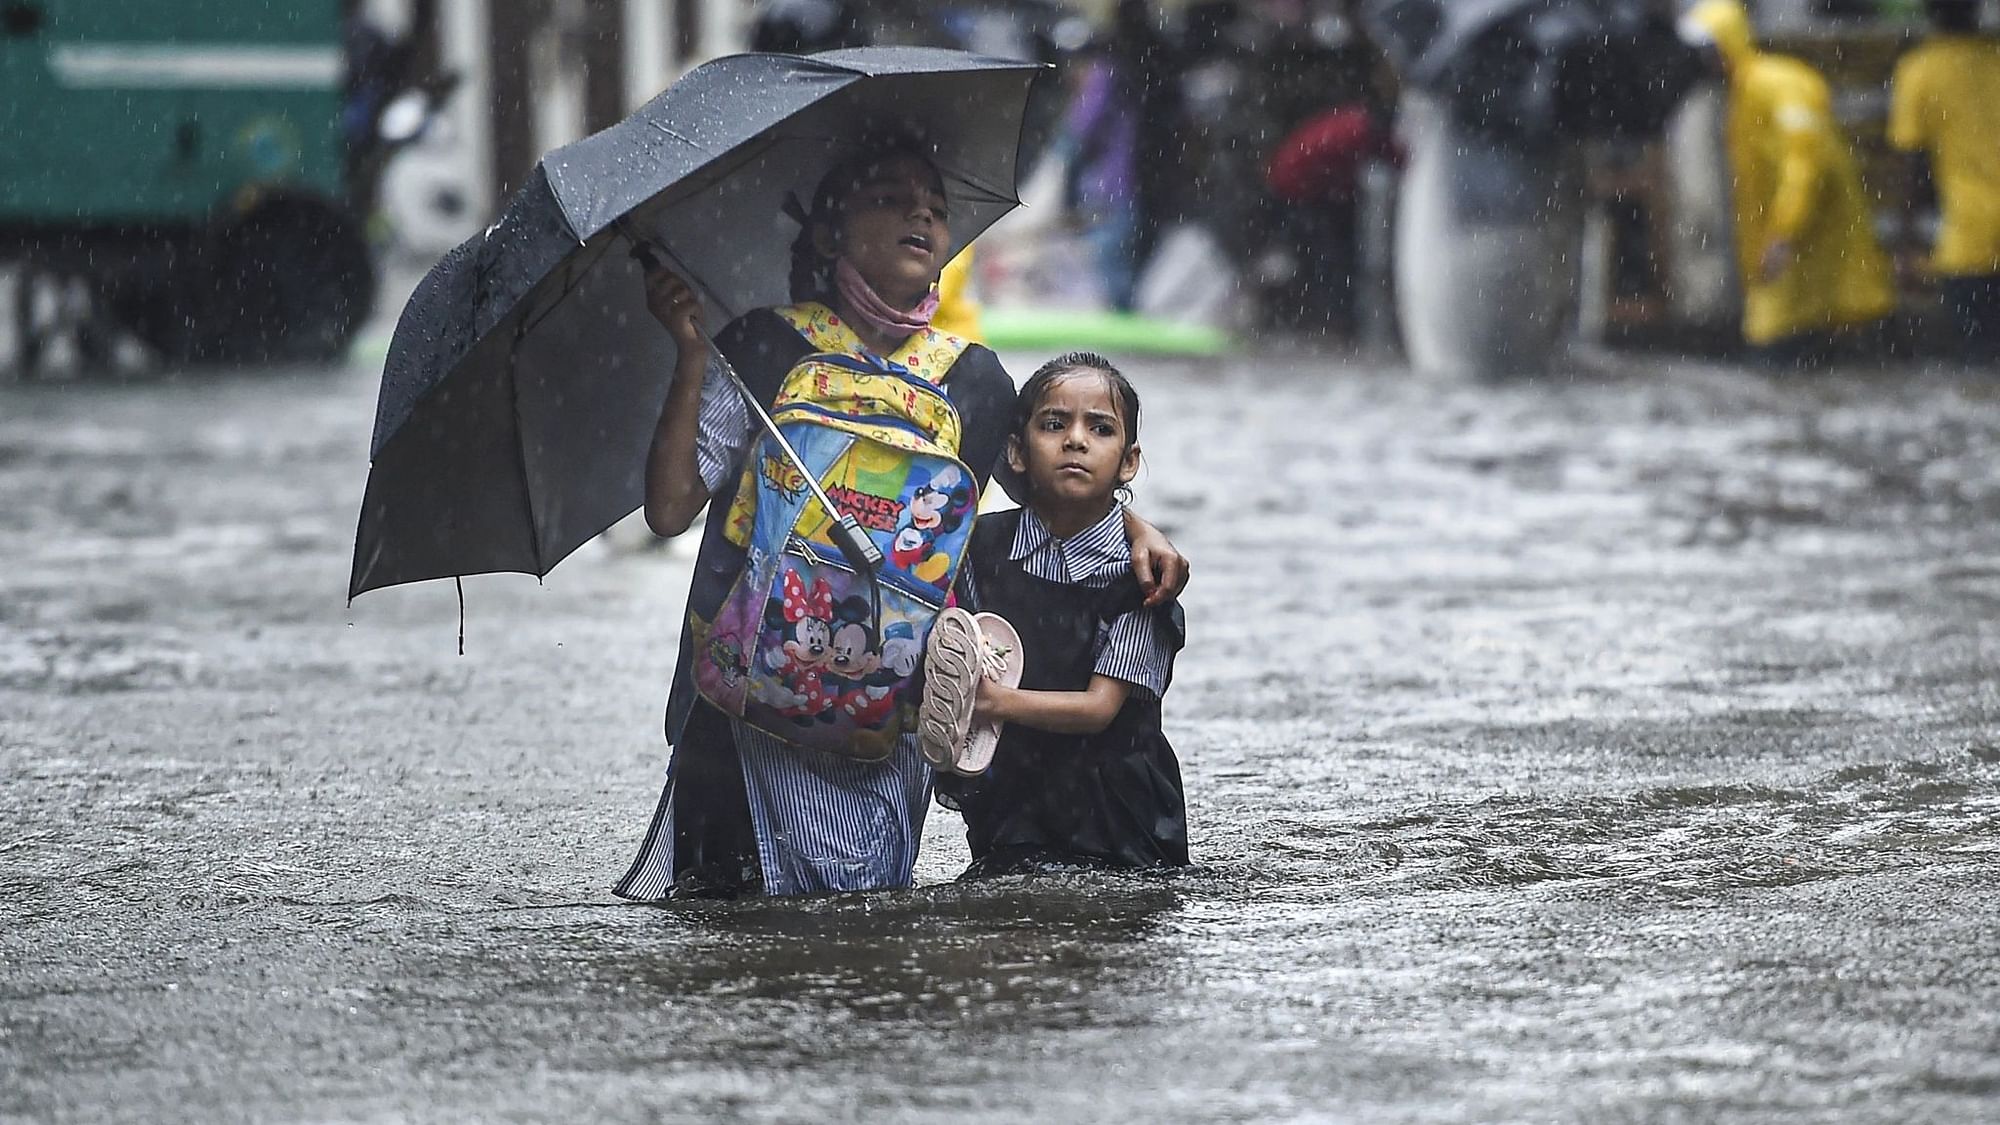 <div class="paragraphs"><p>Mumbai: Schoolchildren wade through a flooded street following heavy monsoon rains, in Mumbai, Tuesday, 5 July 2022.</p></div>